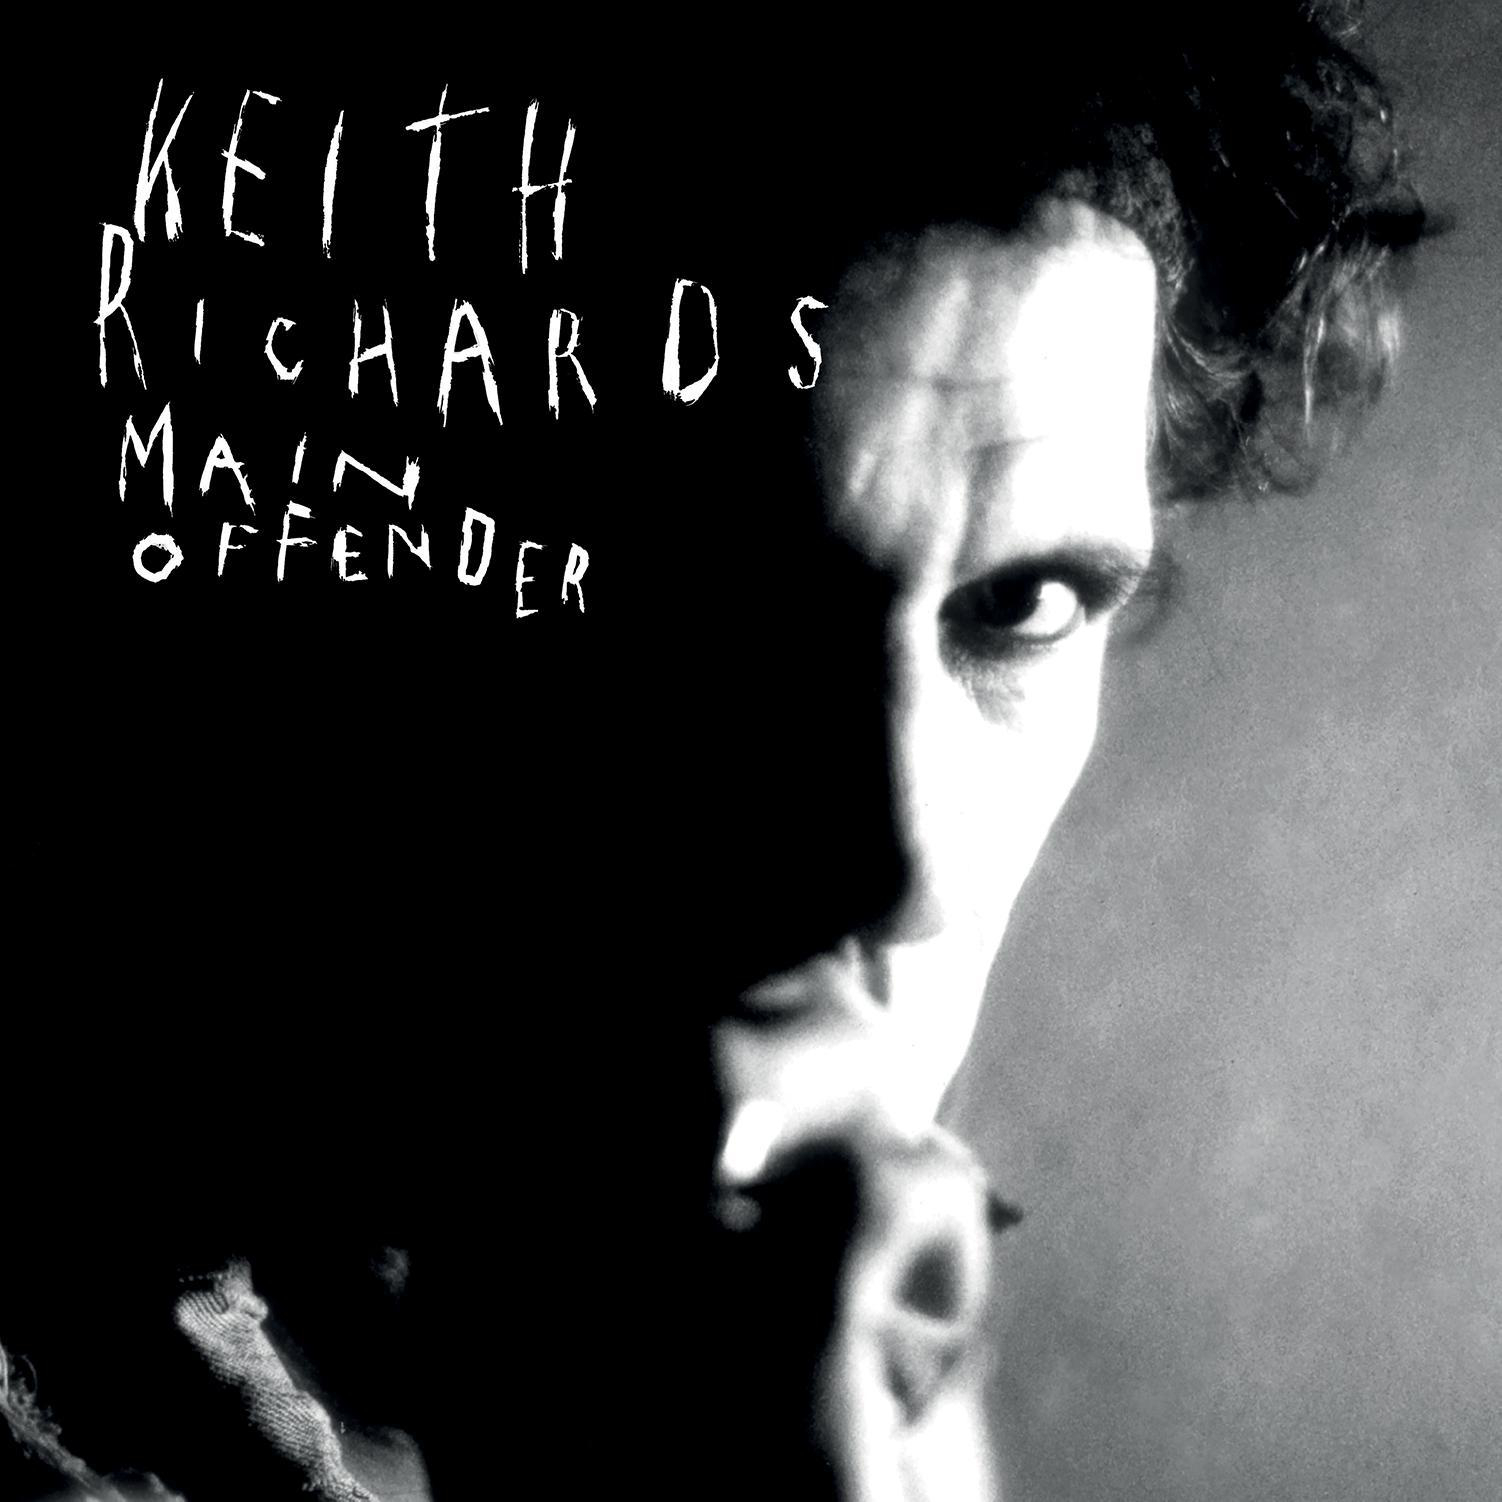 Keith Richards - (Remastered) (Vinyl) Offender - Main